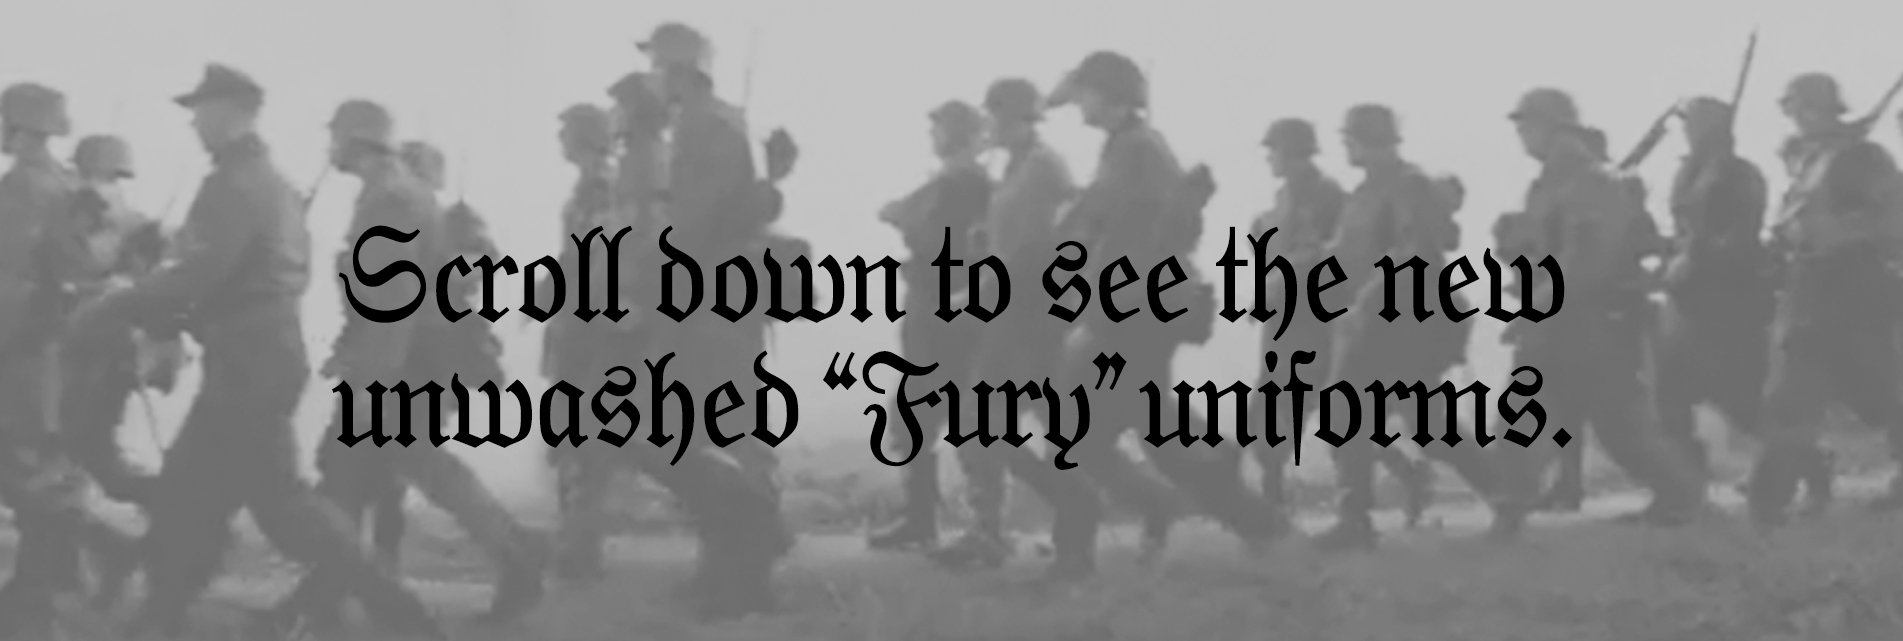 Revised Fury uniform Banner.jpg